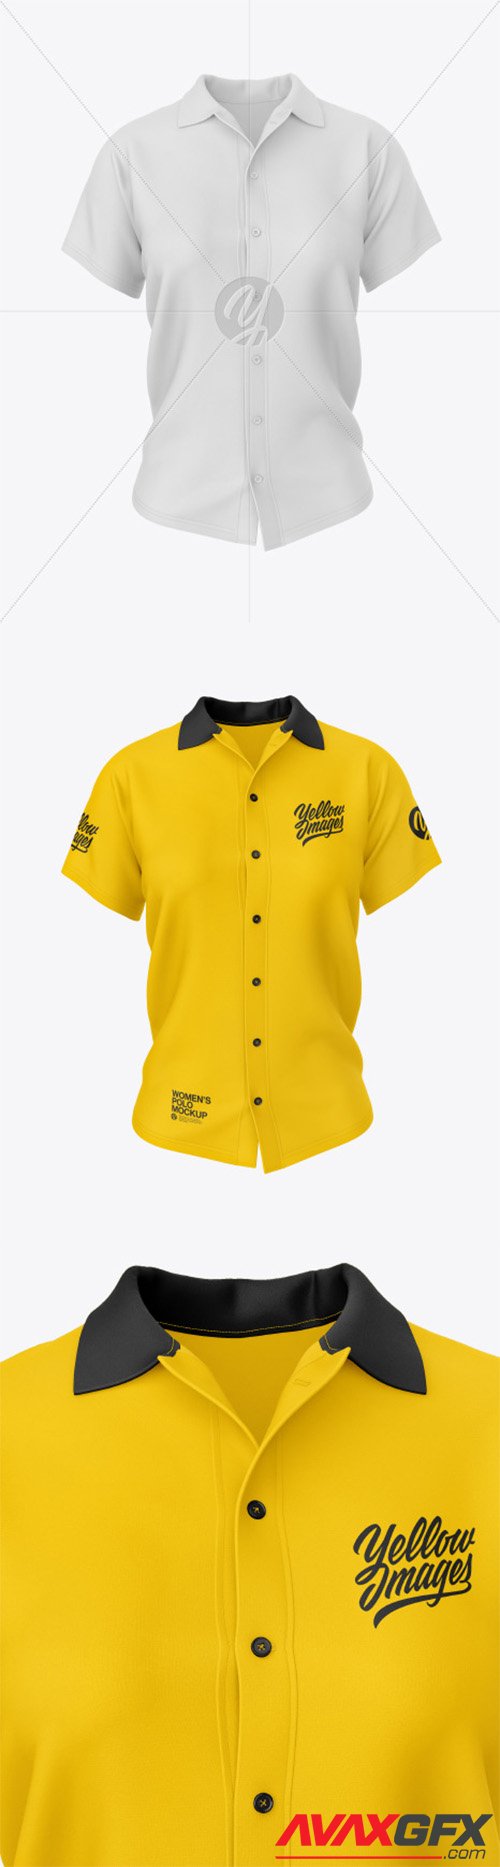 Women's Polo Shirt Mockup 56071